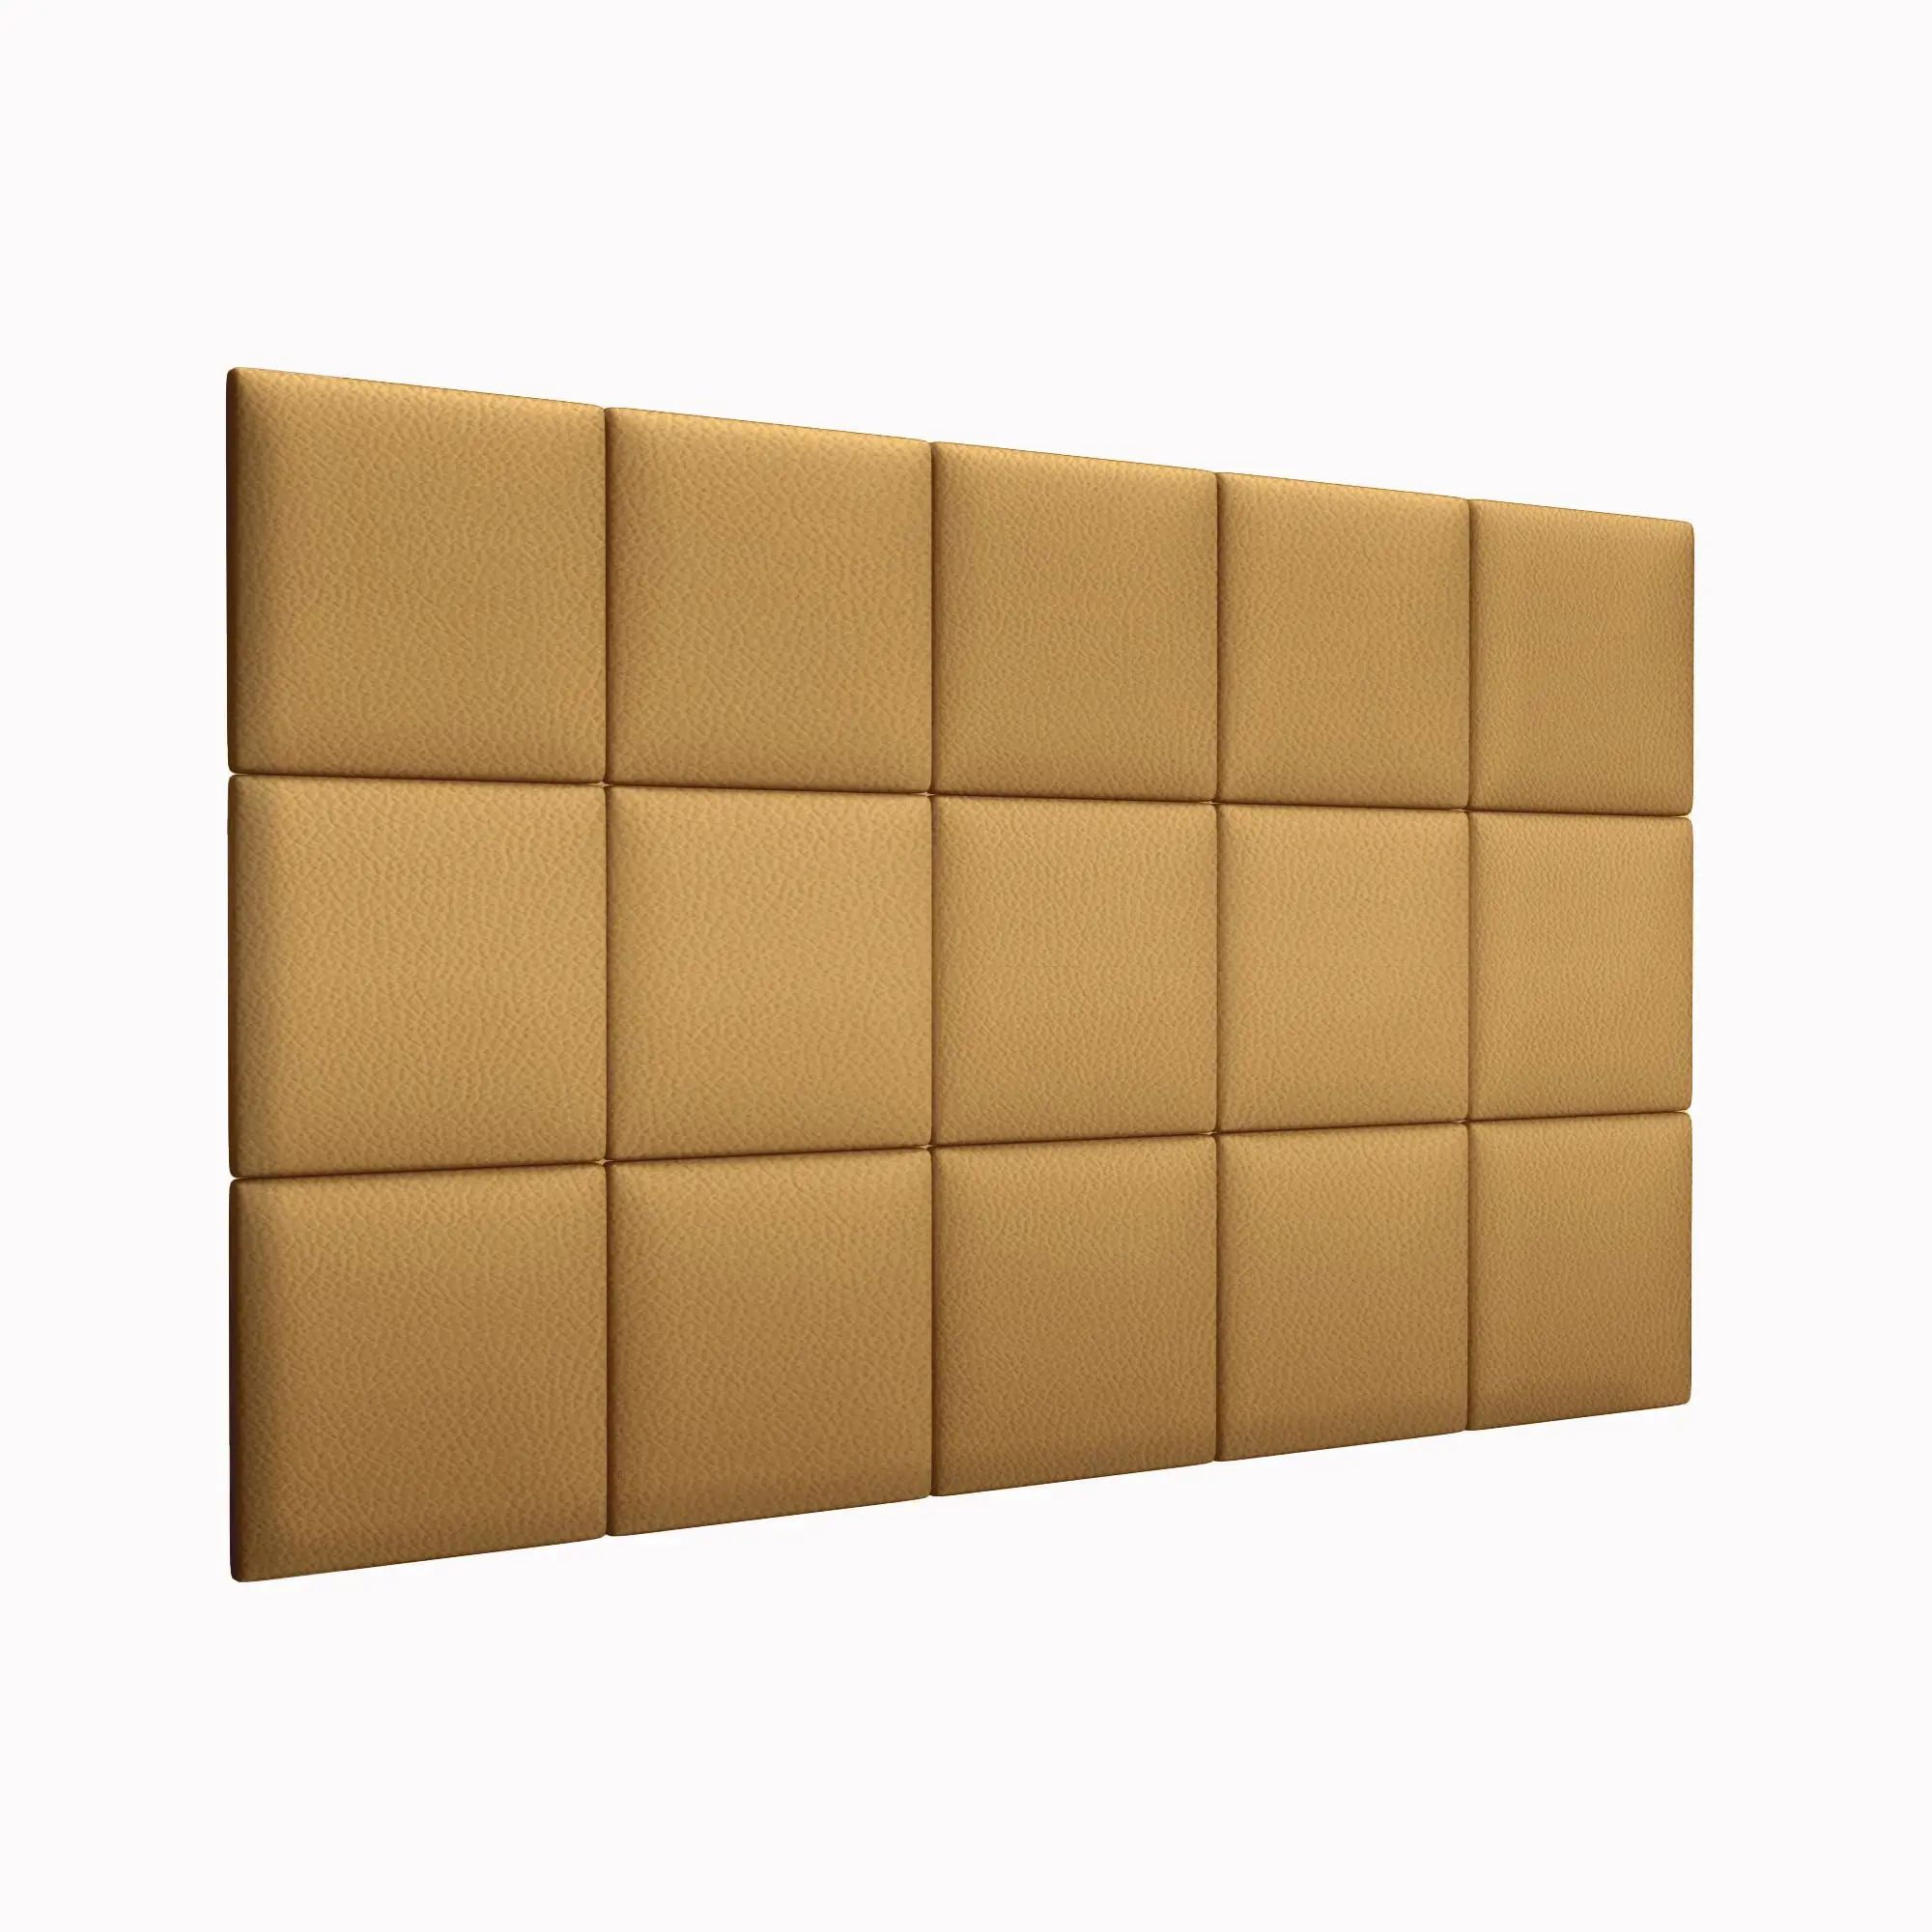 Стеновая панель Eco Leather Gold 30х30 см 2 шт.